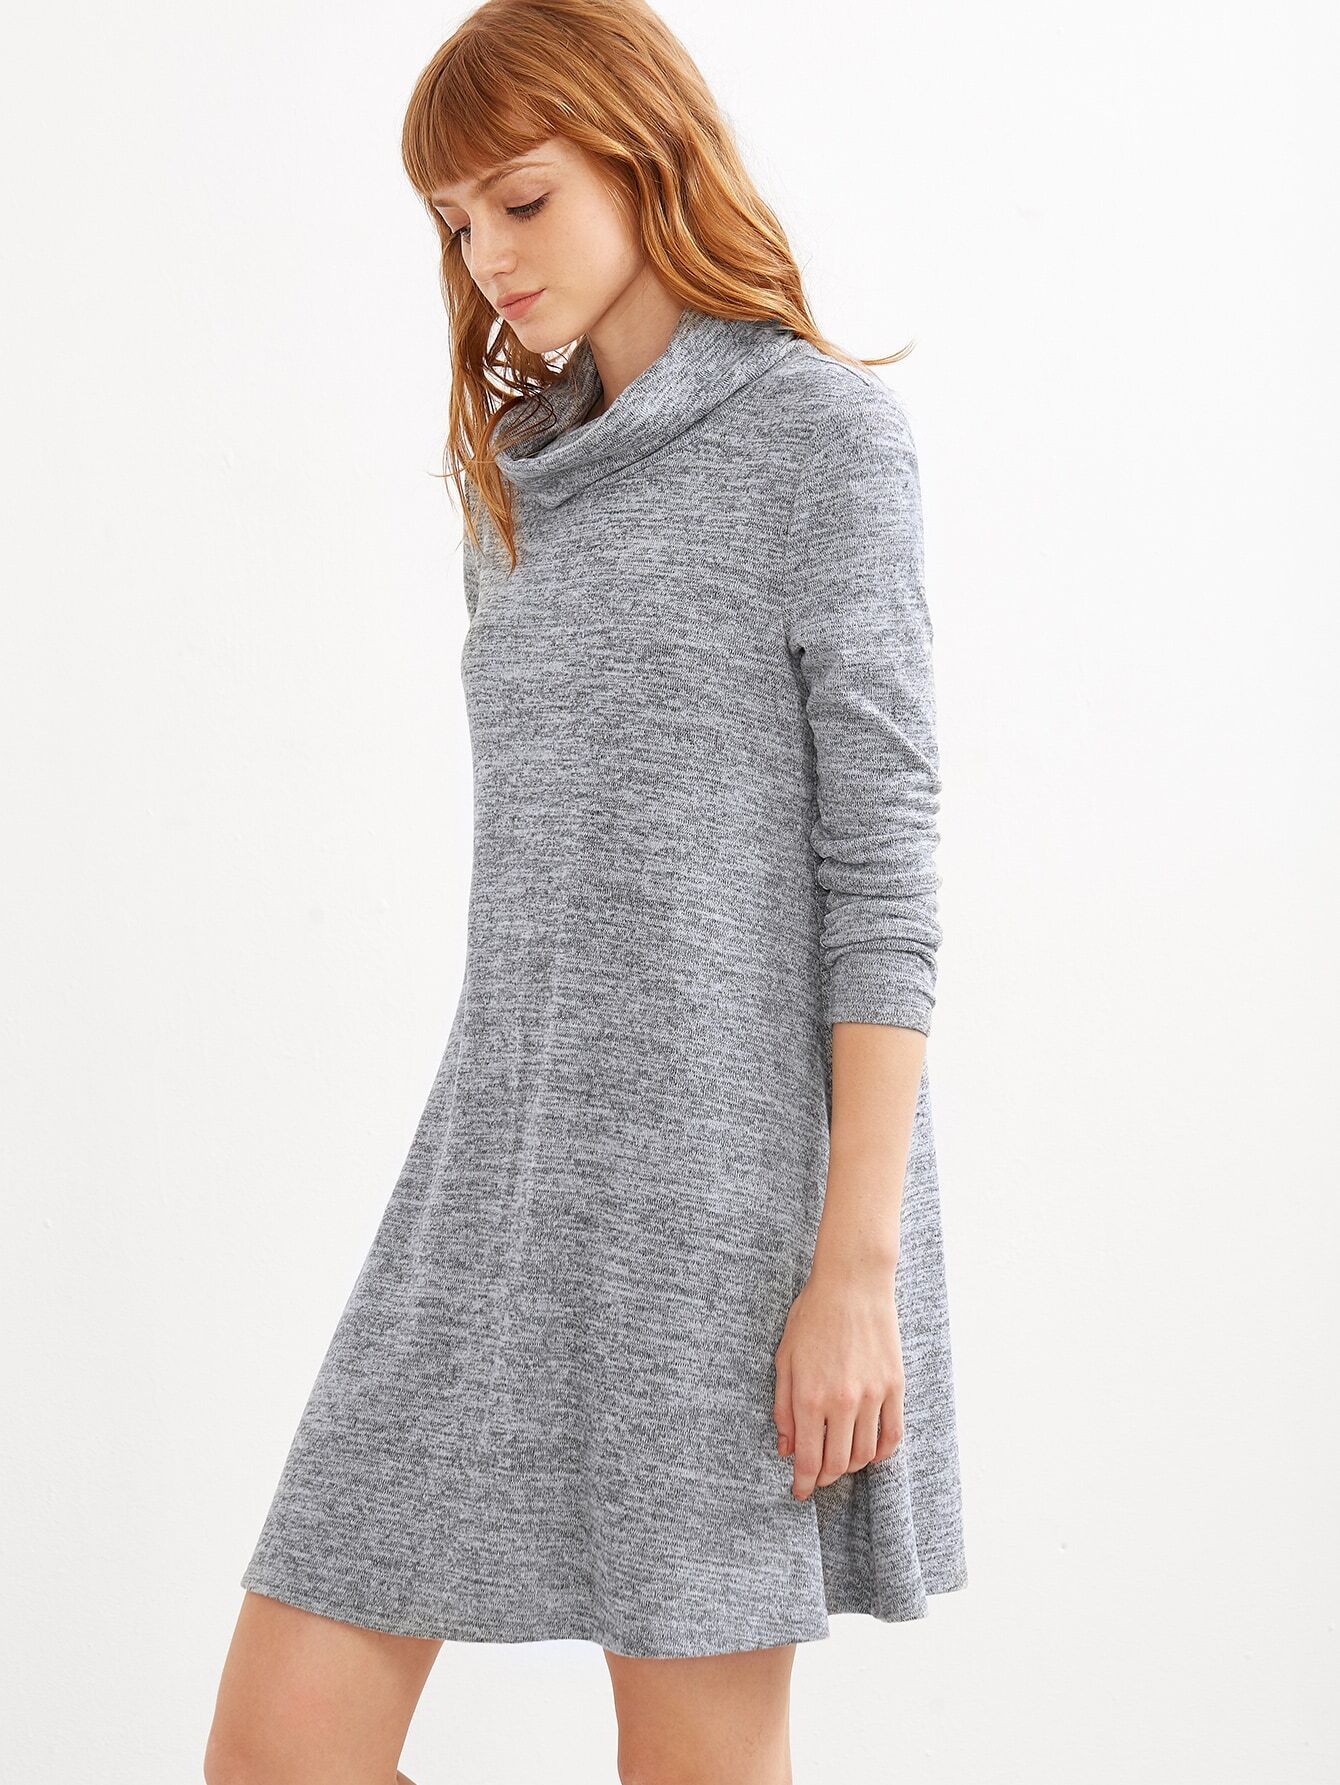 Grey Marled Knit Cowl Neck A Line Dress | ROMWE